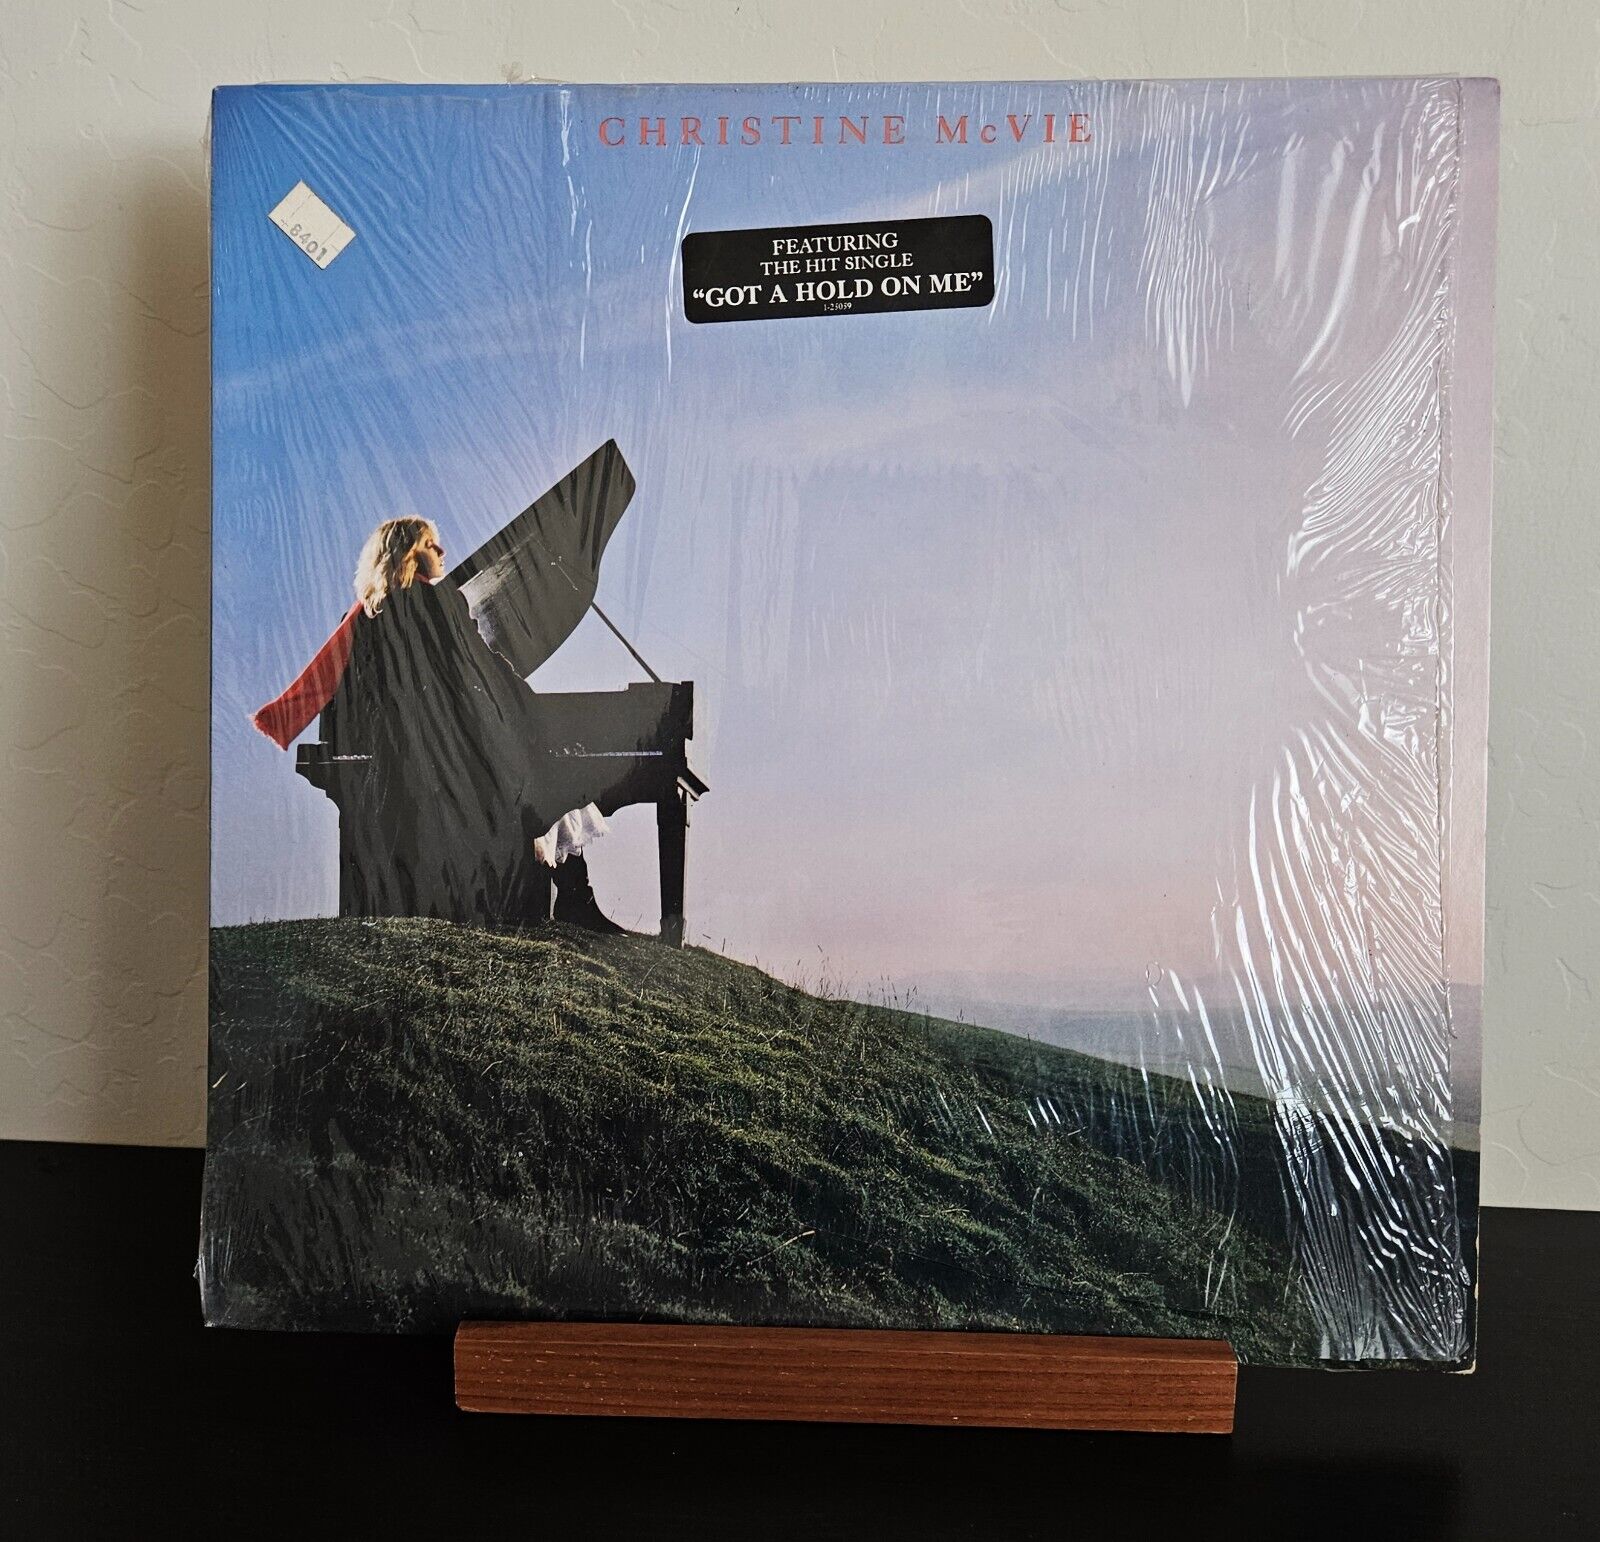 Christine McVie – Christine McVie  (LP w/ shrink on cover) 1984  Fleetwood Mac